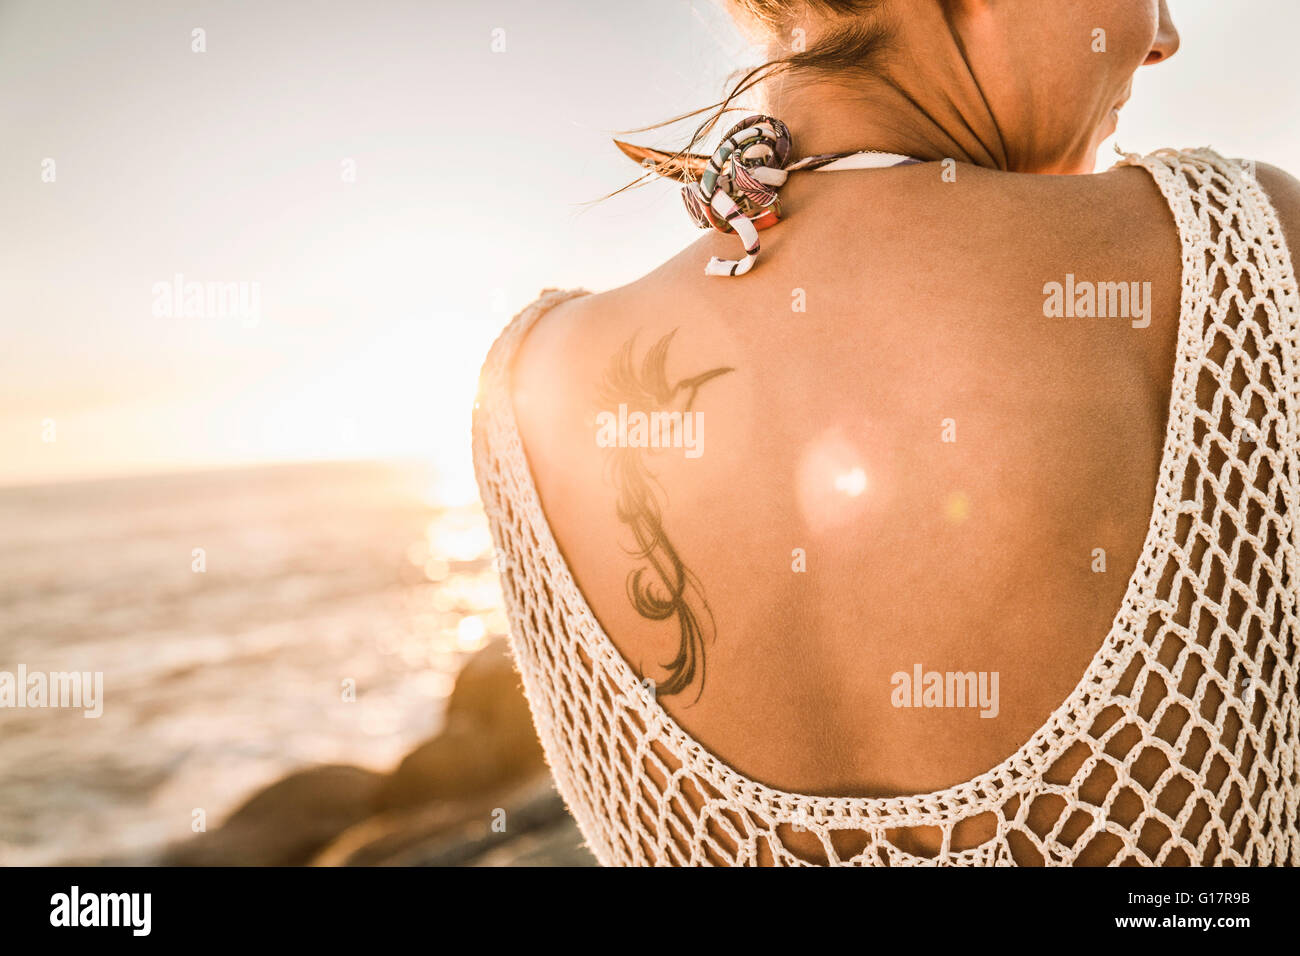 Small Sun Tattoos Discover the Most Beautiful Small Sun Tattoo Ideas